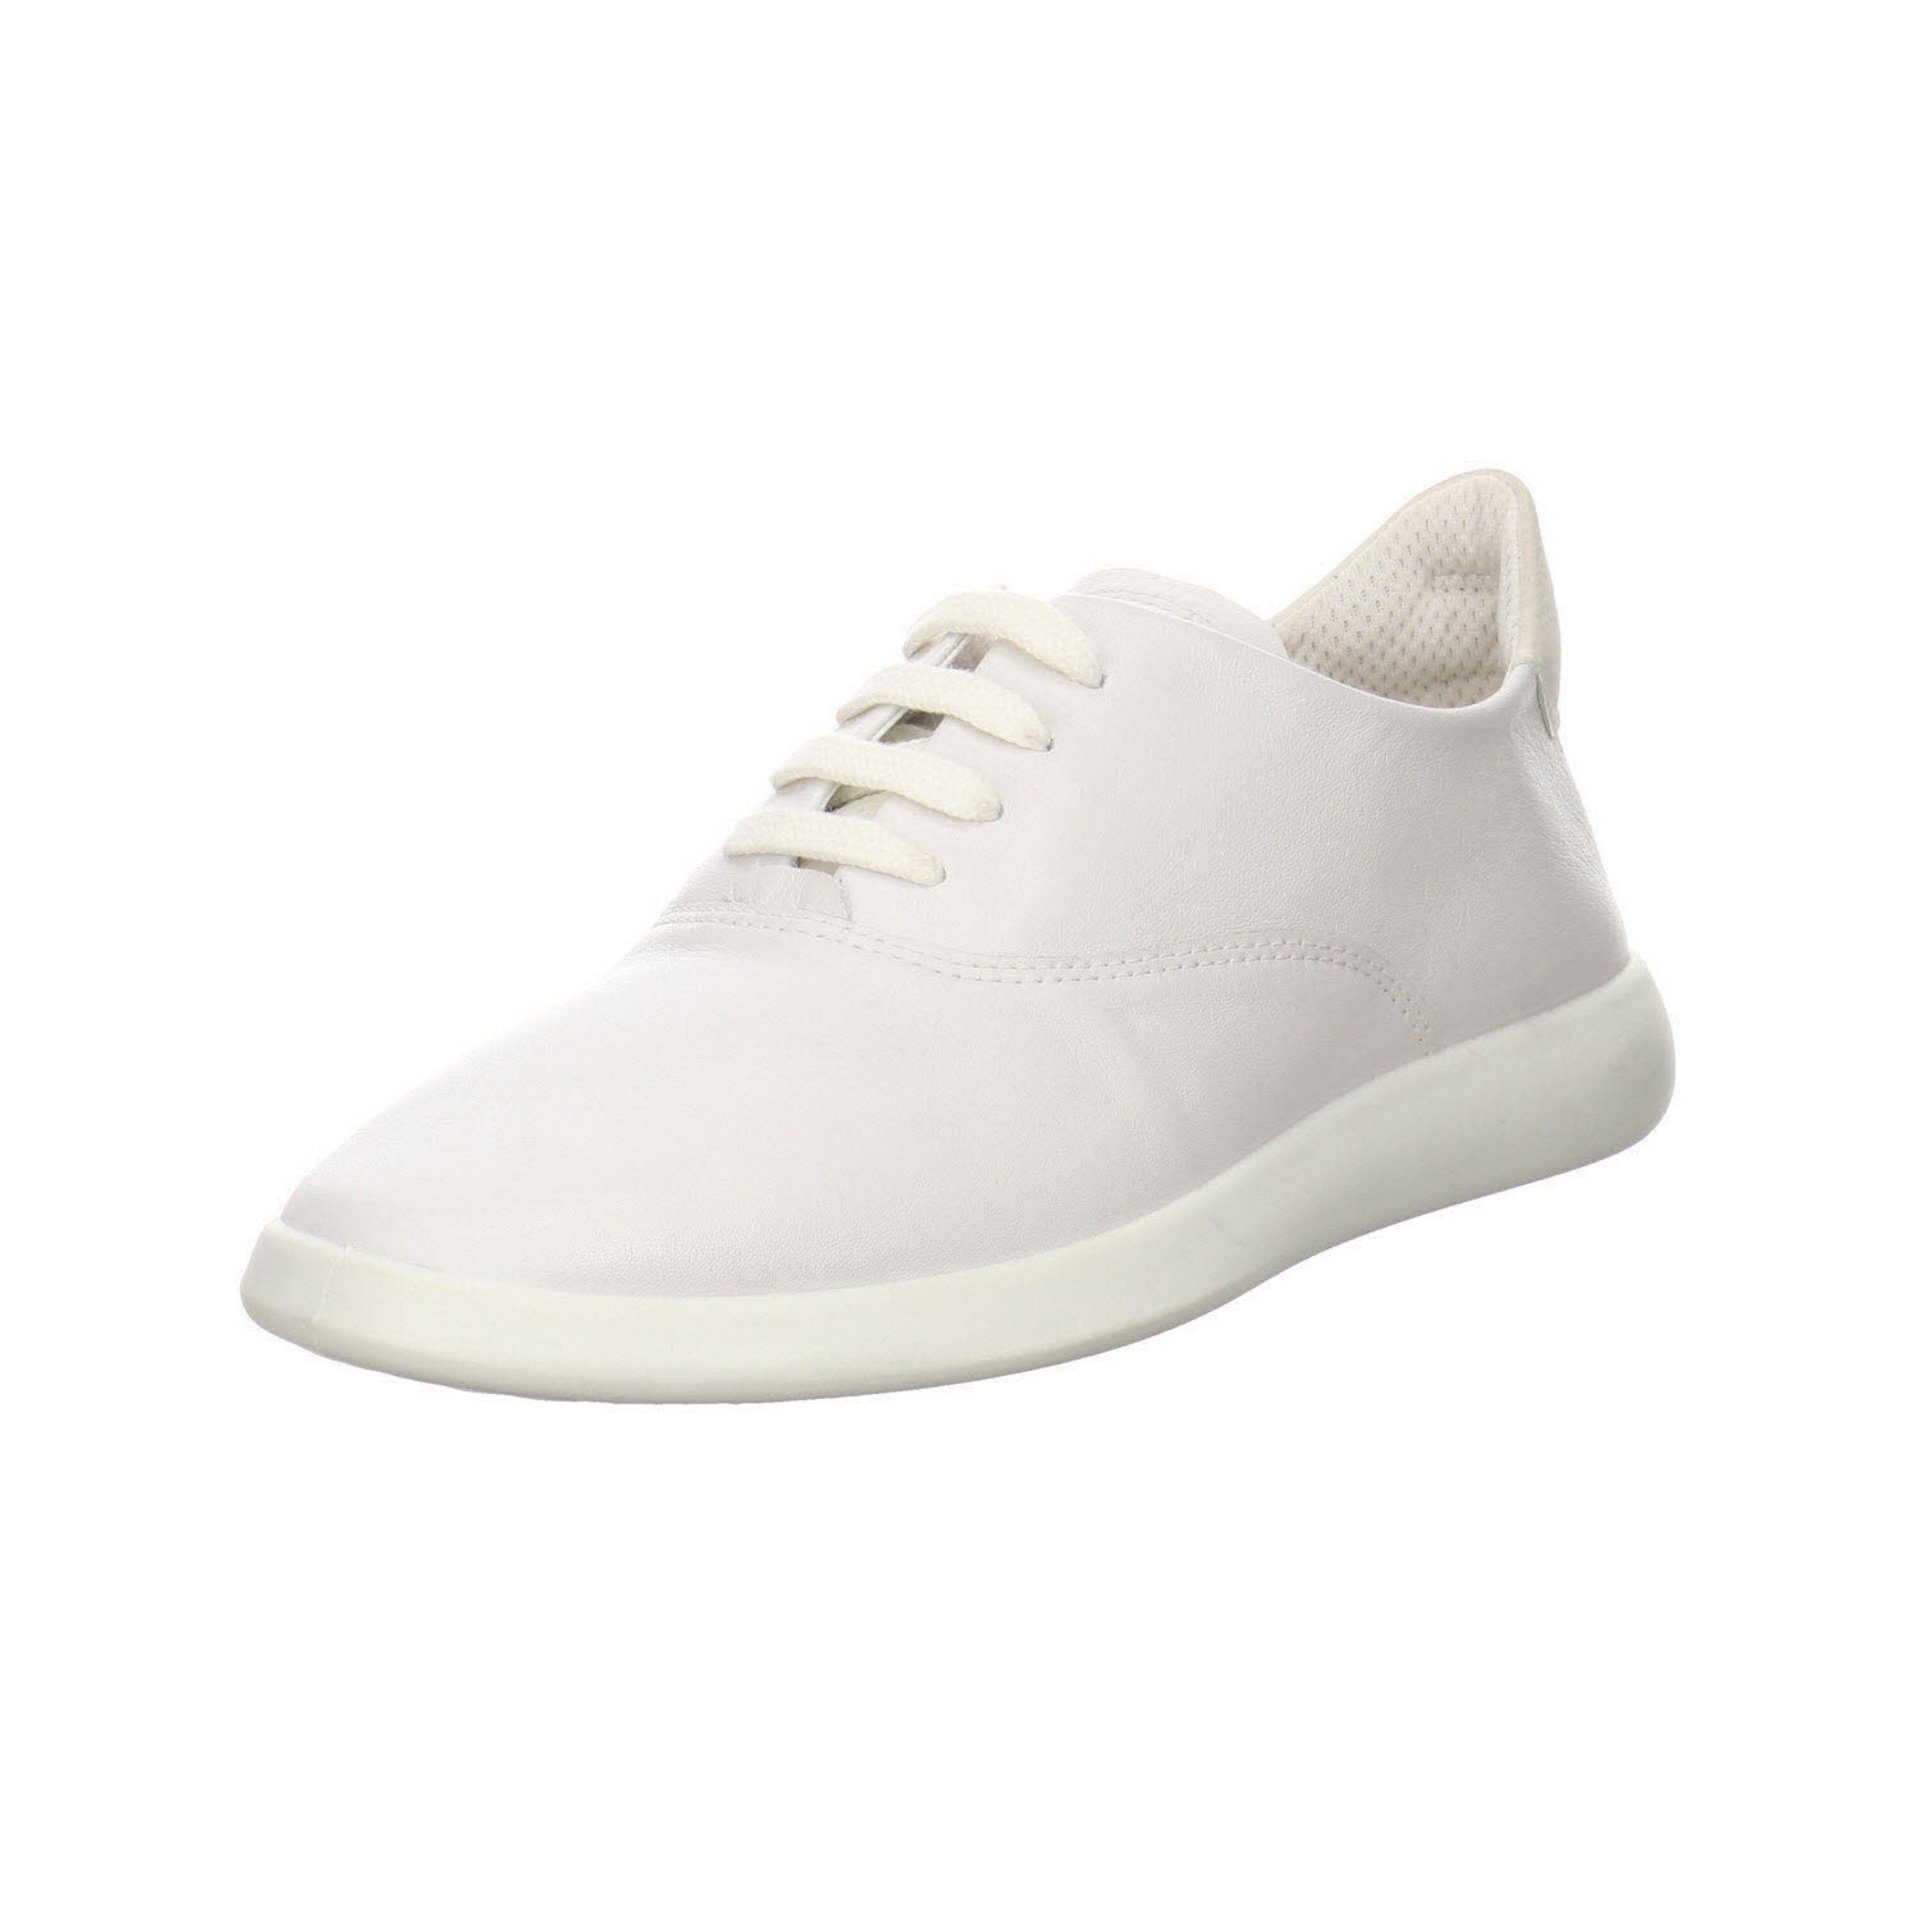 Ecco Damen Sneaker Schuhe Minimalist Sneaker Schnürschuh Glattleder WHITE/SHADOW WHITE